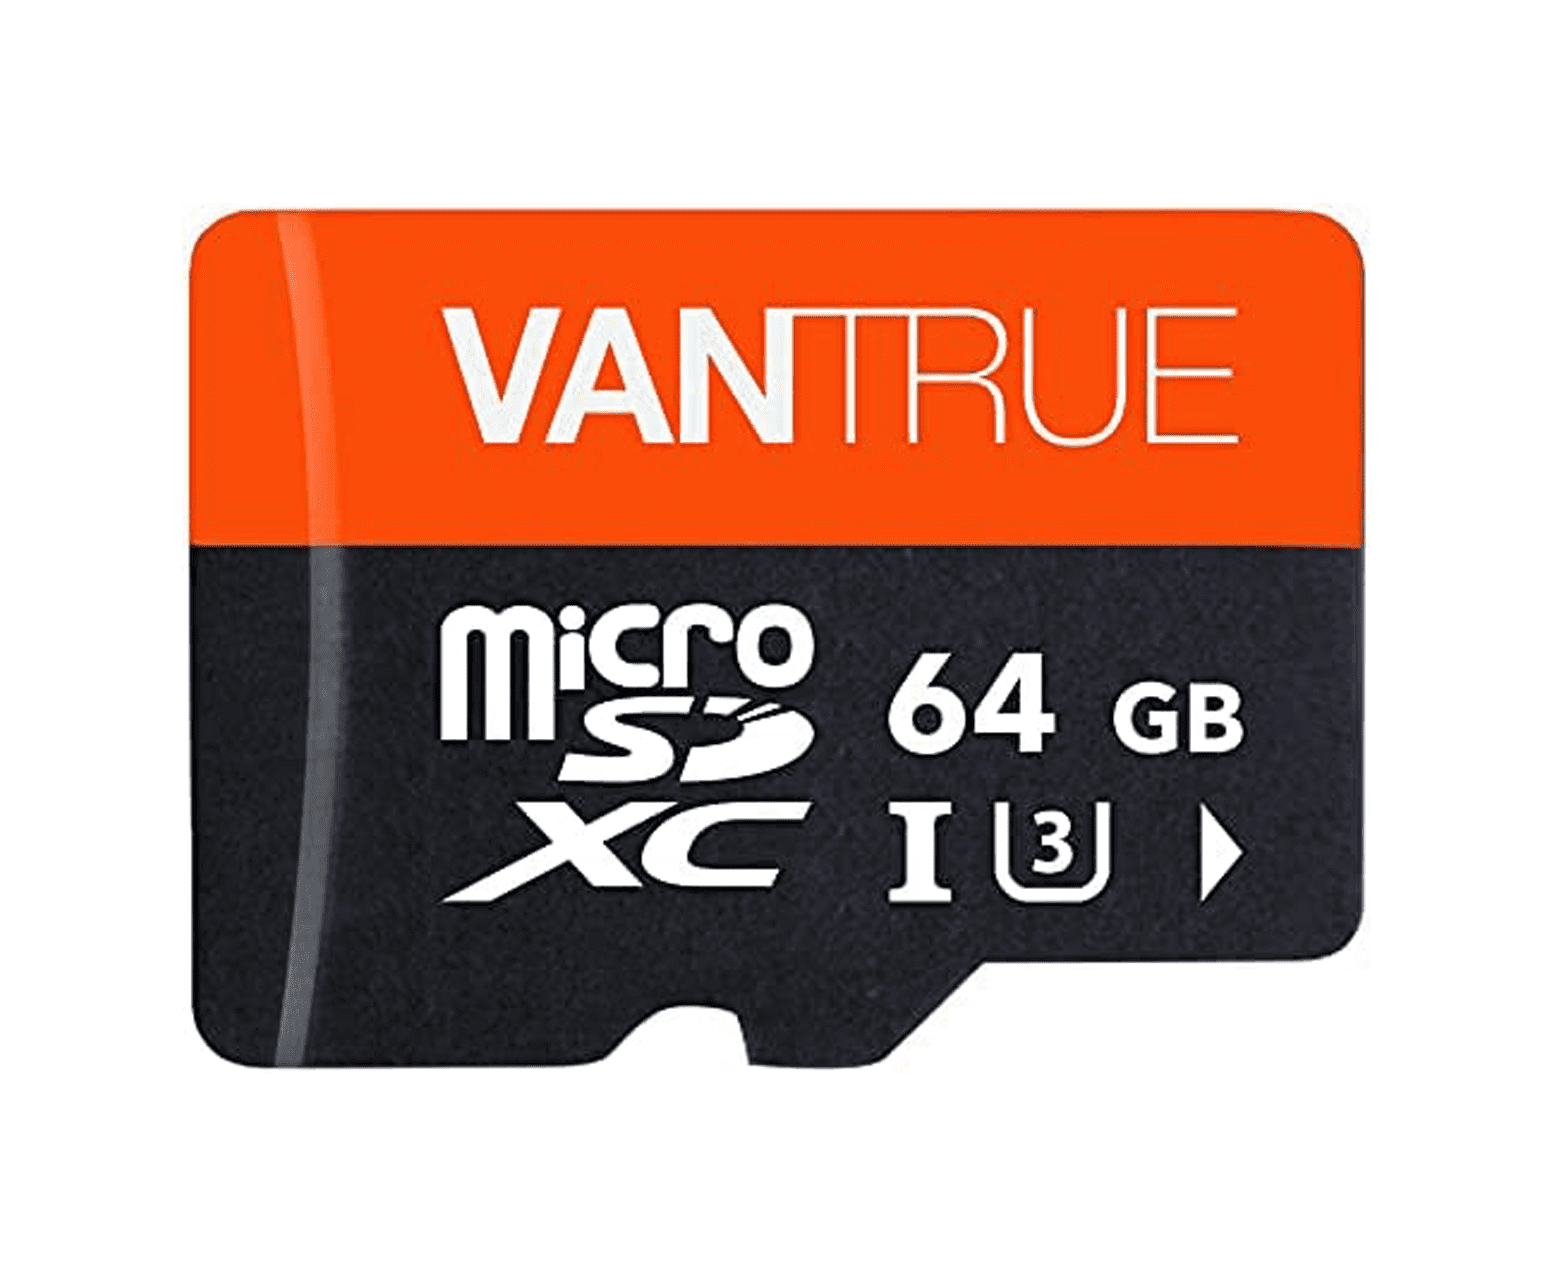 Vantrue SD card 